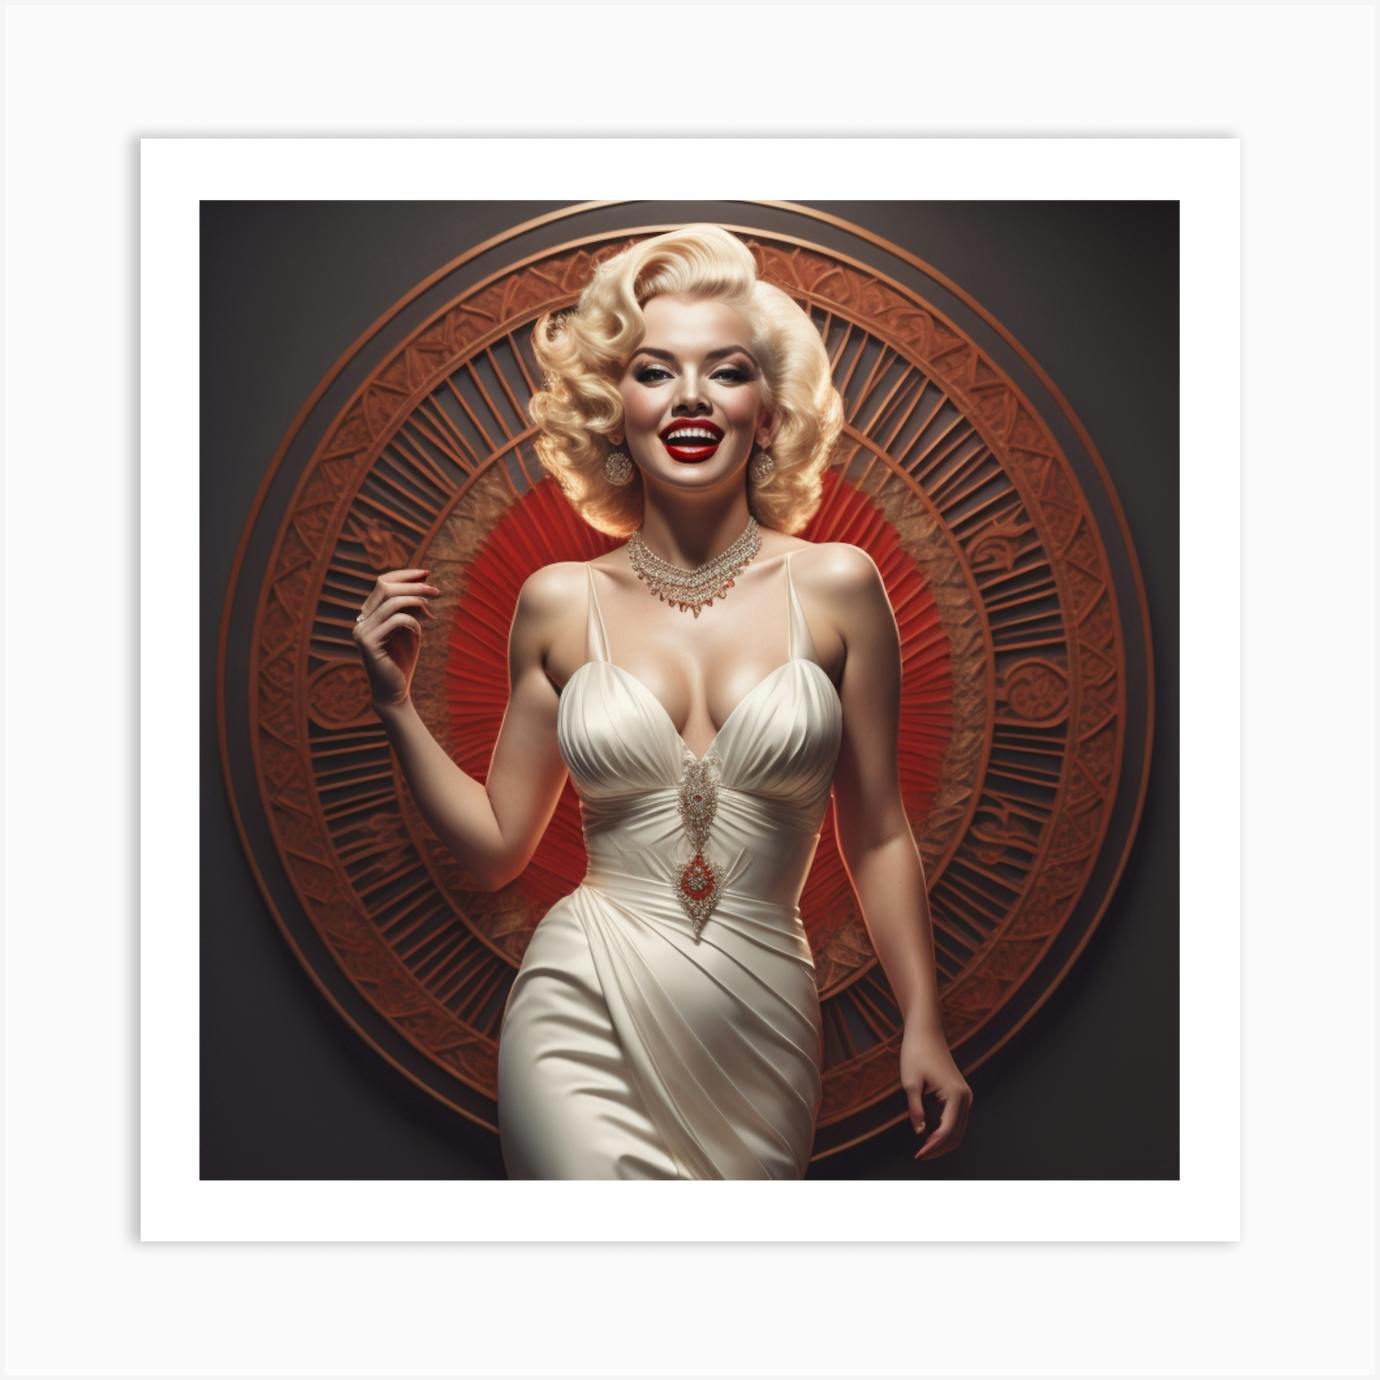 Marilyn Monroe pose Ruby by TobonStudios on DeviantArt